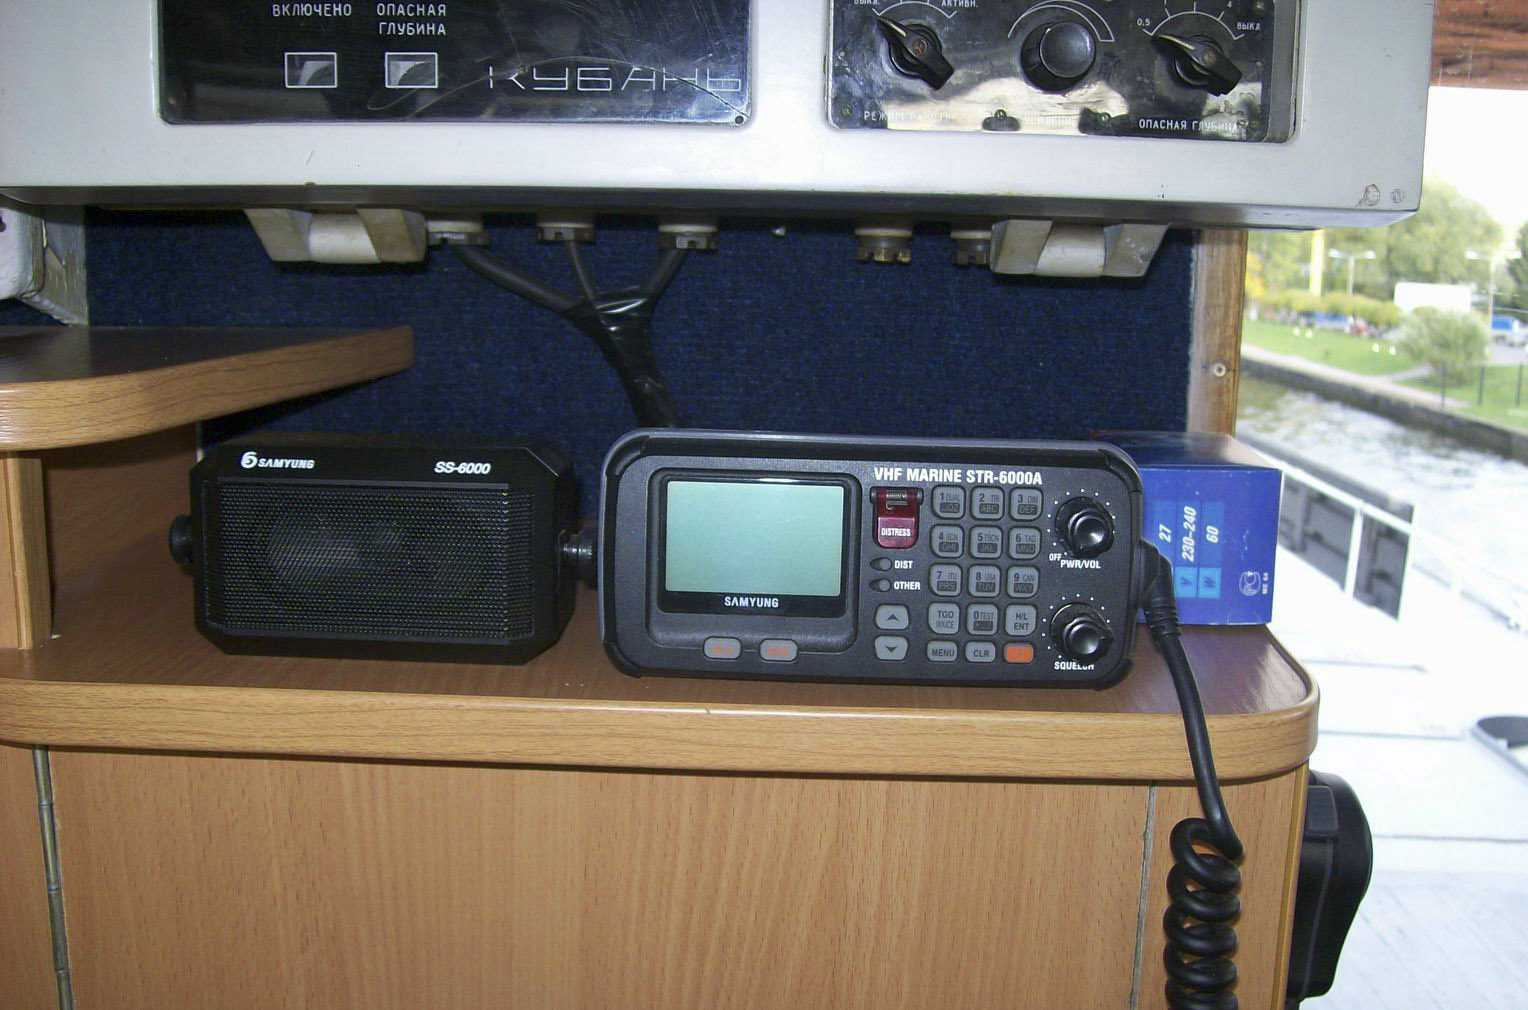 Укв на судне. УКВ SAMYUNG Str-6000a. Морская радиостанция SAMYUNG Str – 6000 a. Str 6000a УКВ радиоустановка. Str-6000a.